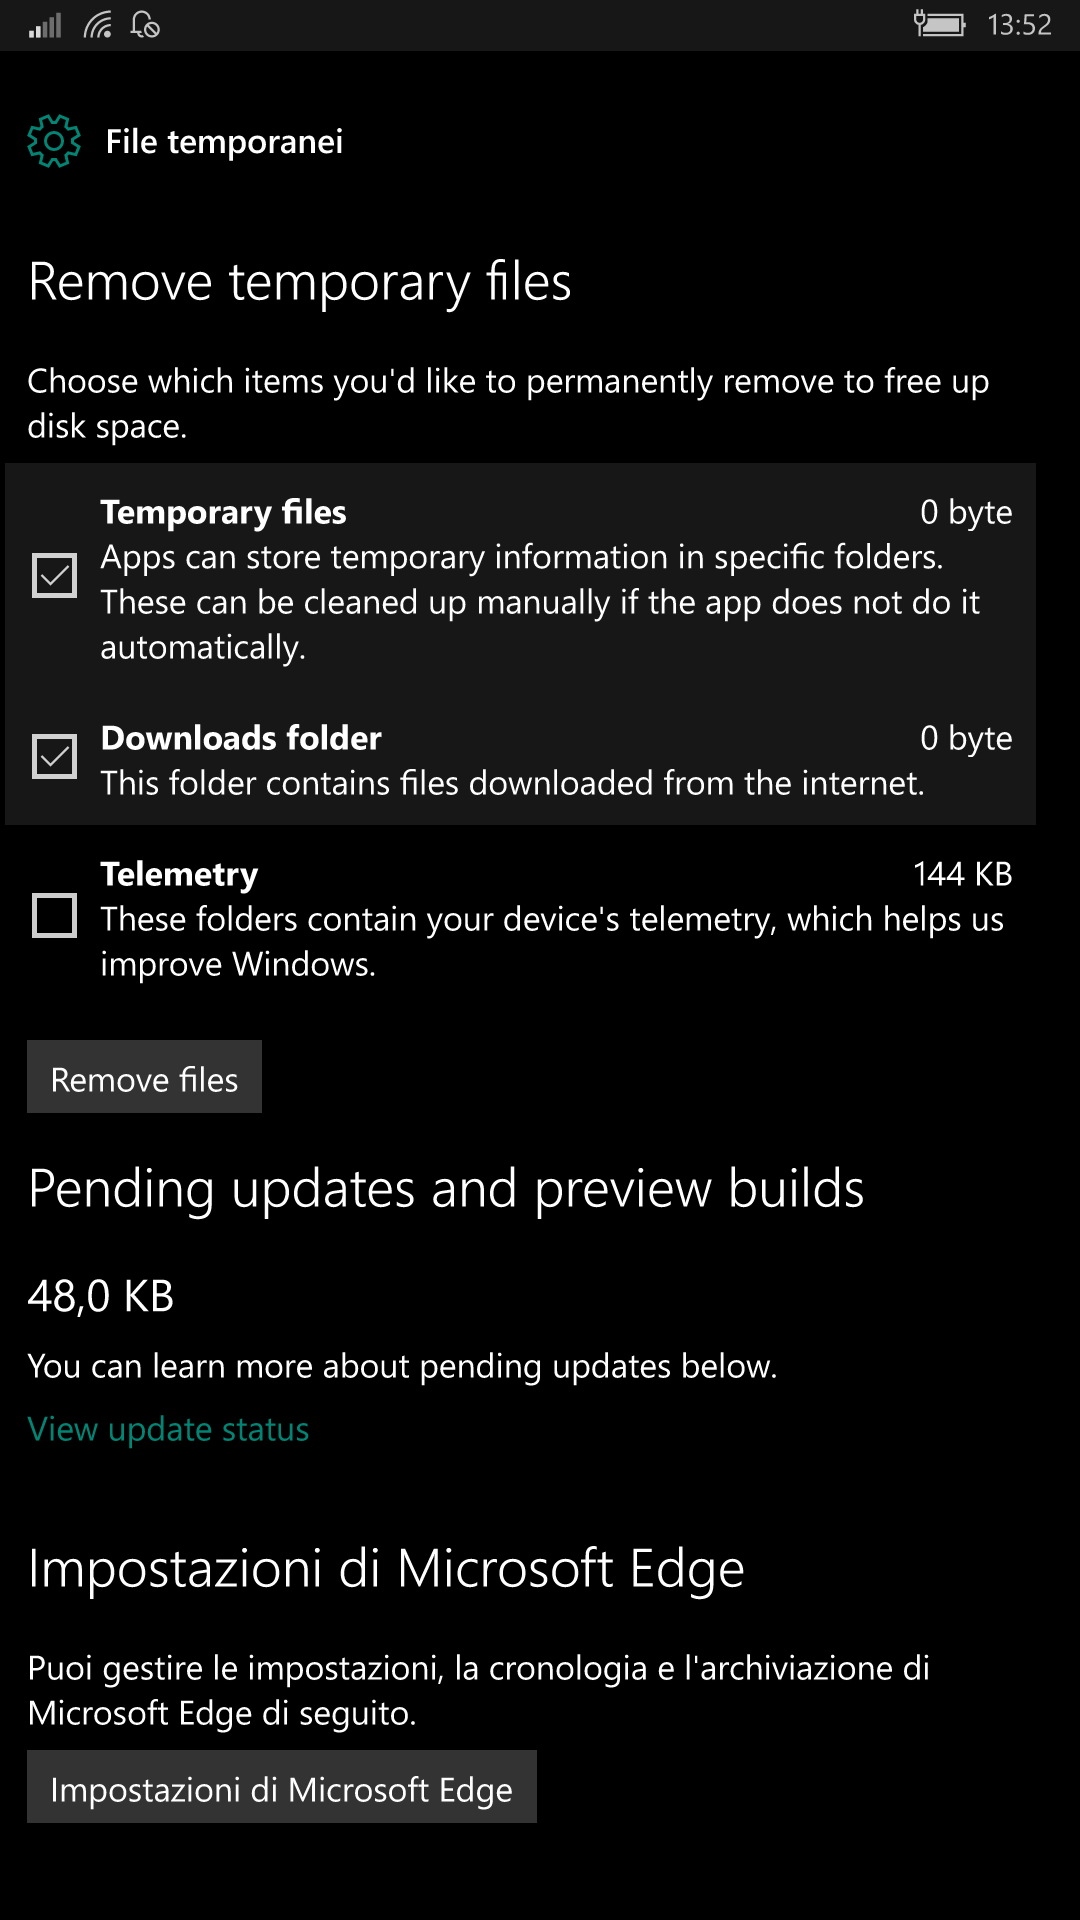 File temporanei - Windows 10 Mobile 14332